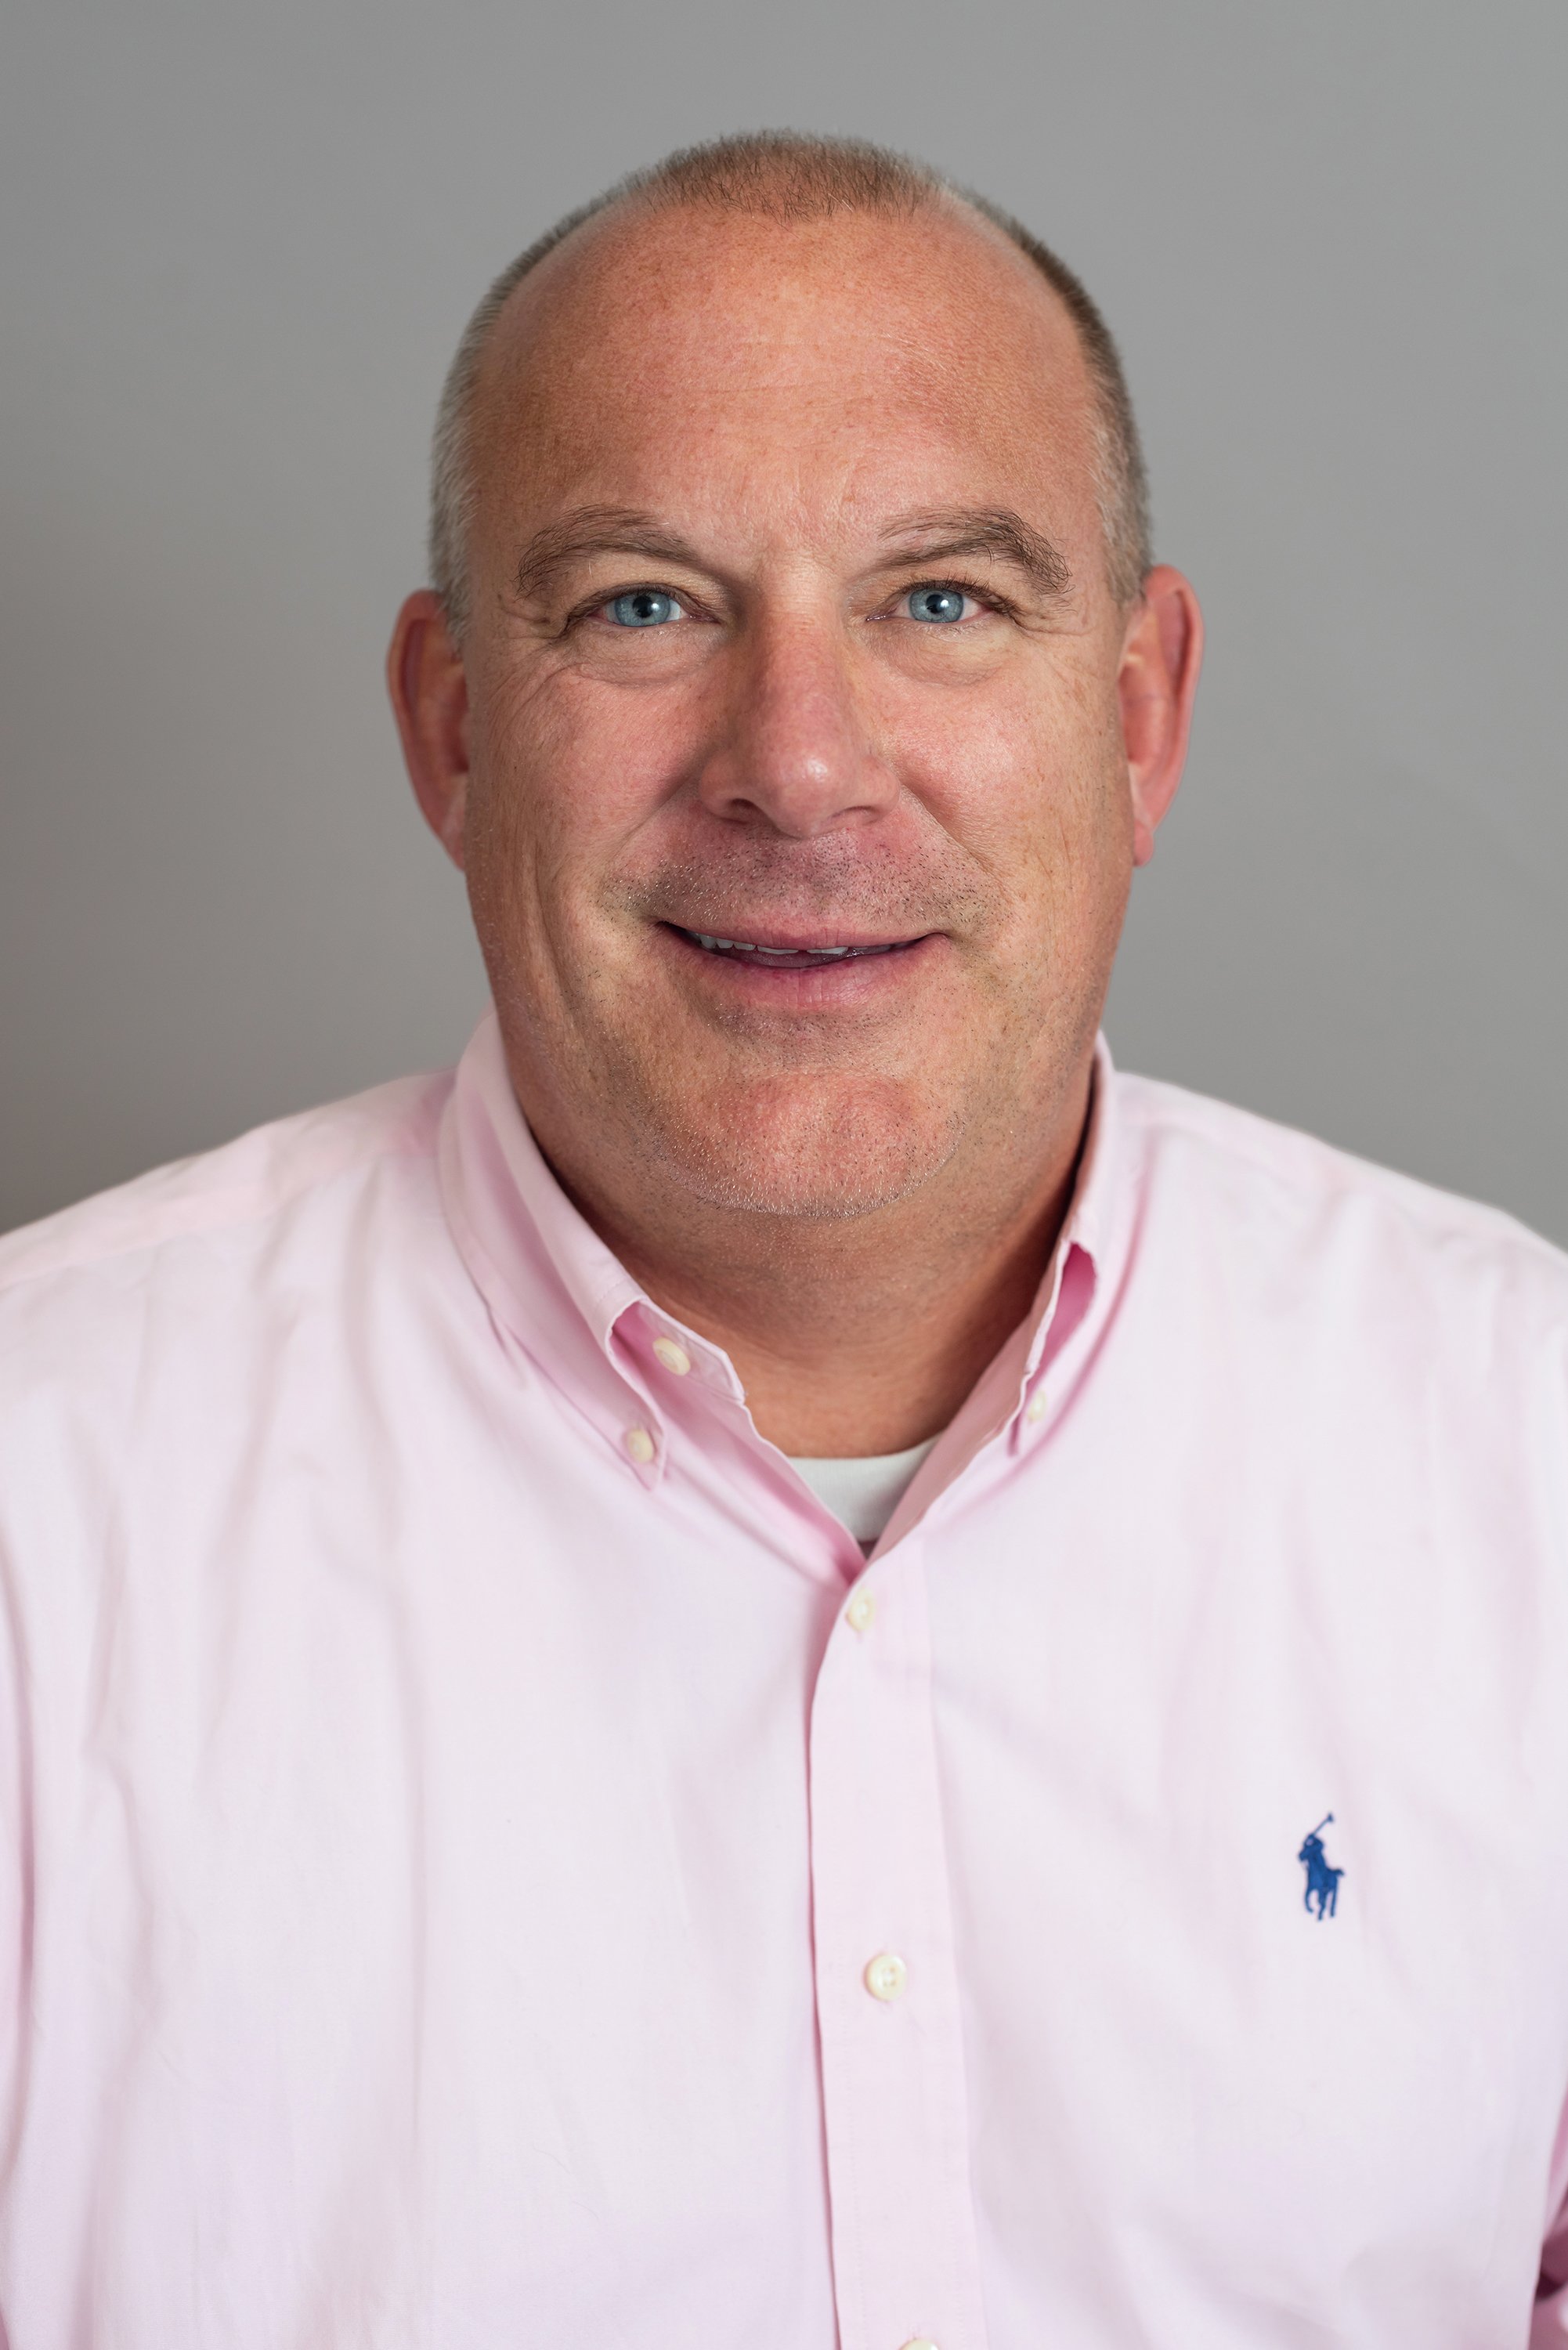  Corporate headshot of a man wearing a pink button down shirt by Ari Scott, NYC headshot photographer. 